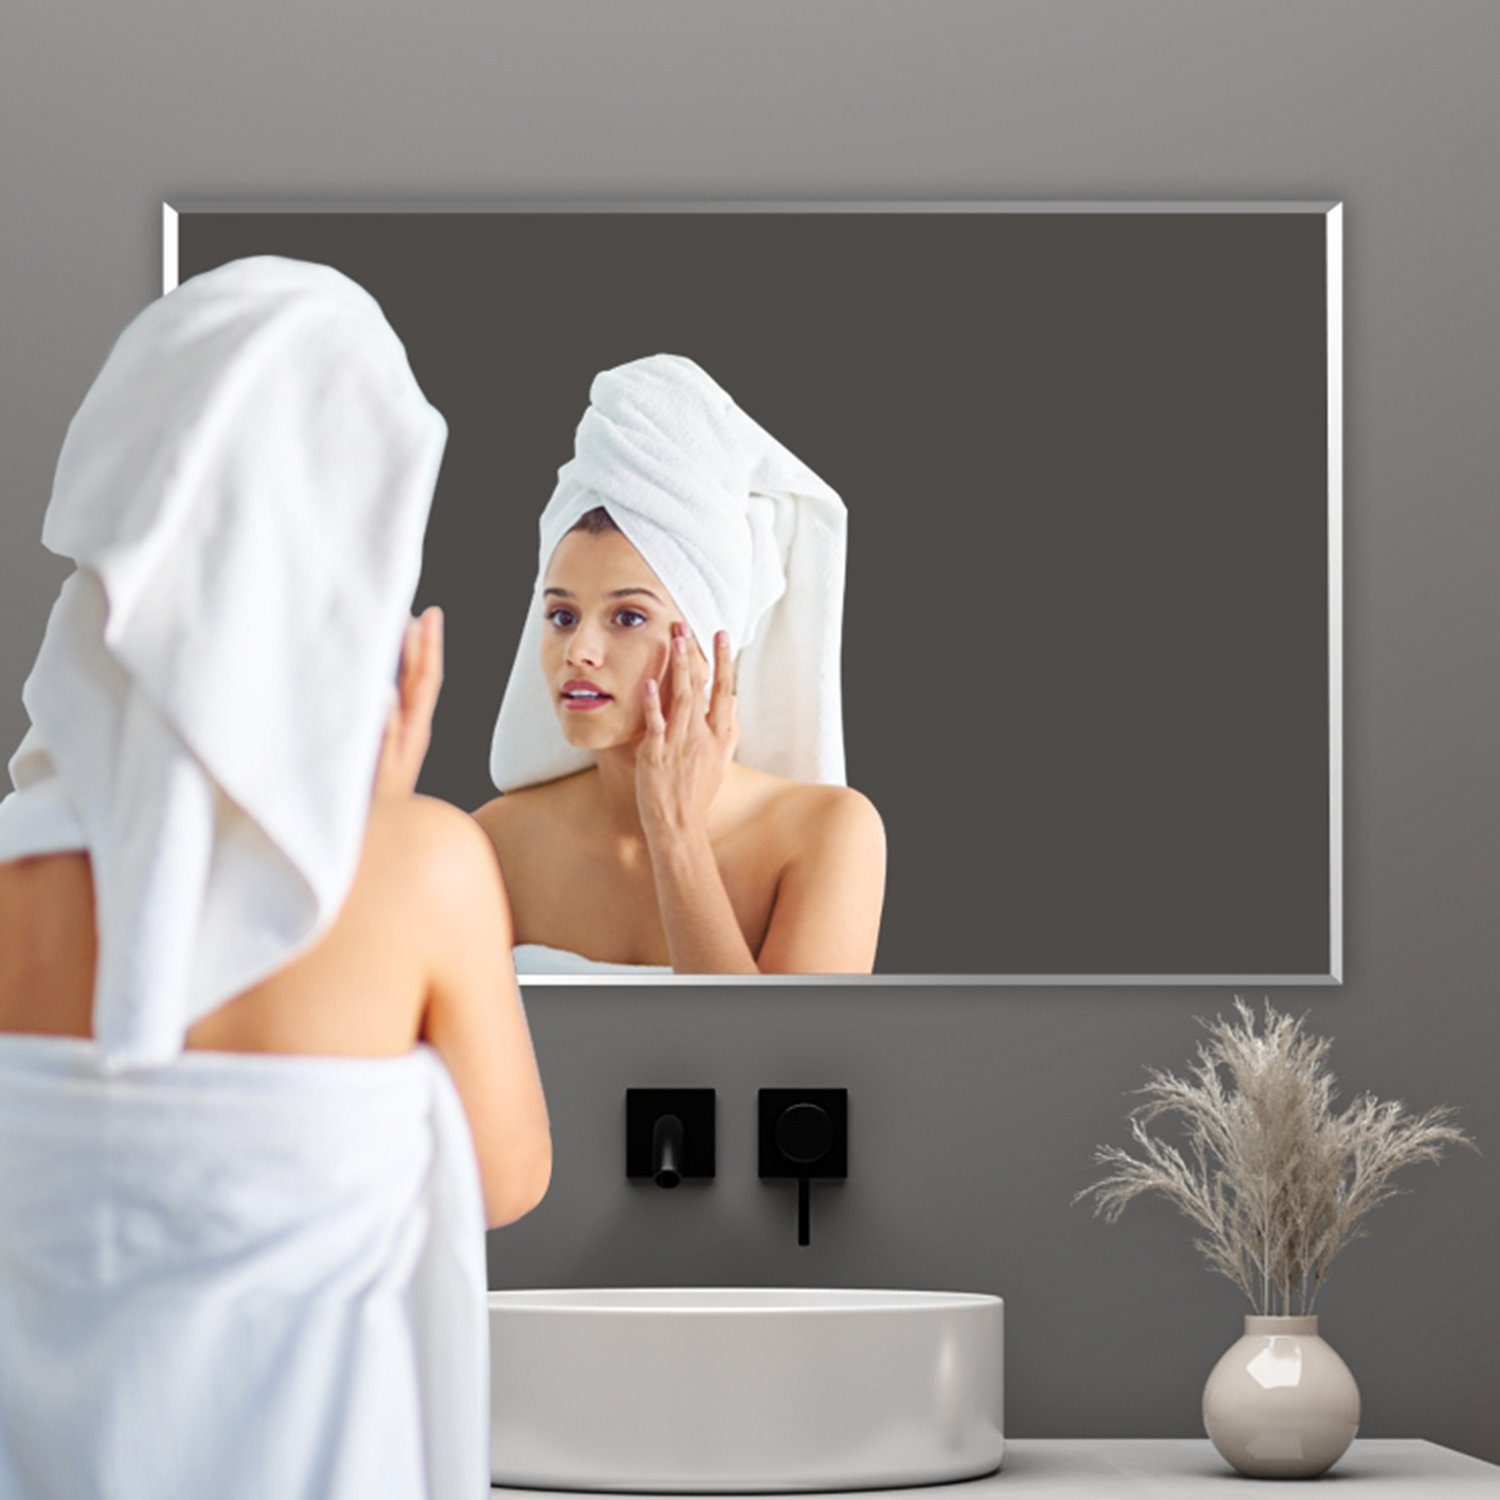 duschspa Badspiegel Wandspiegel Spiegel Deko horizontal/vertikal, Badezimmerspiegel Faccettenspiegel